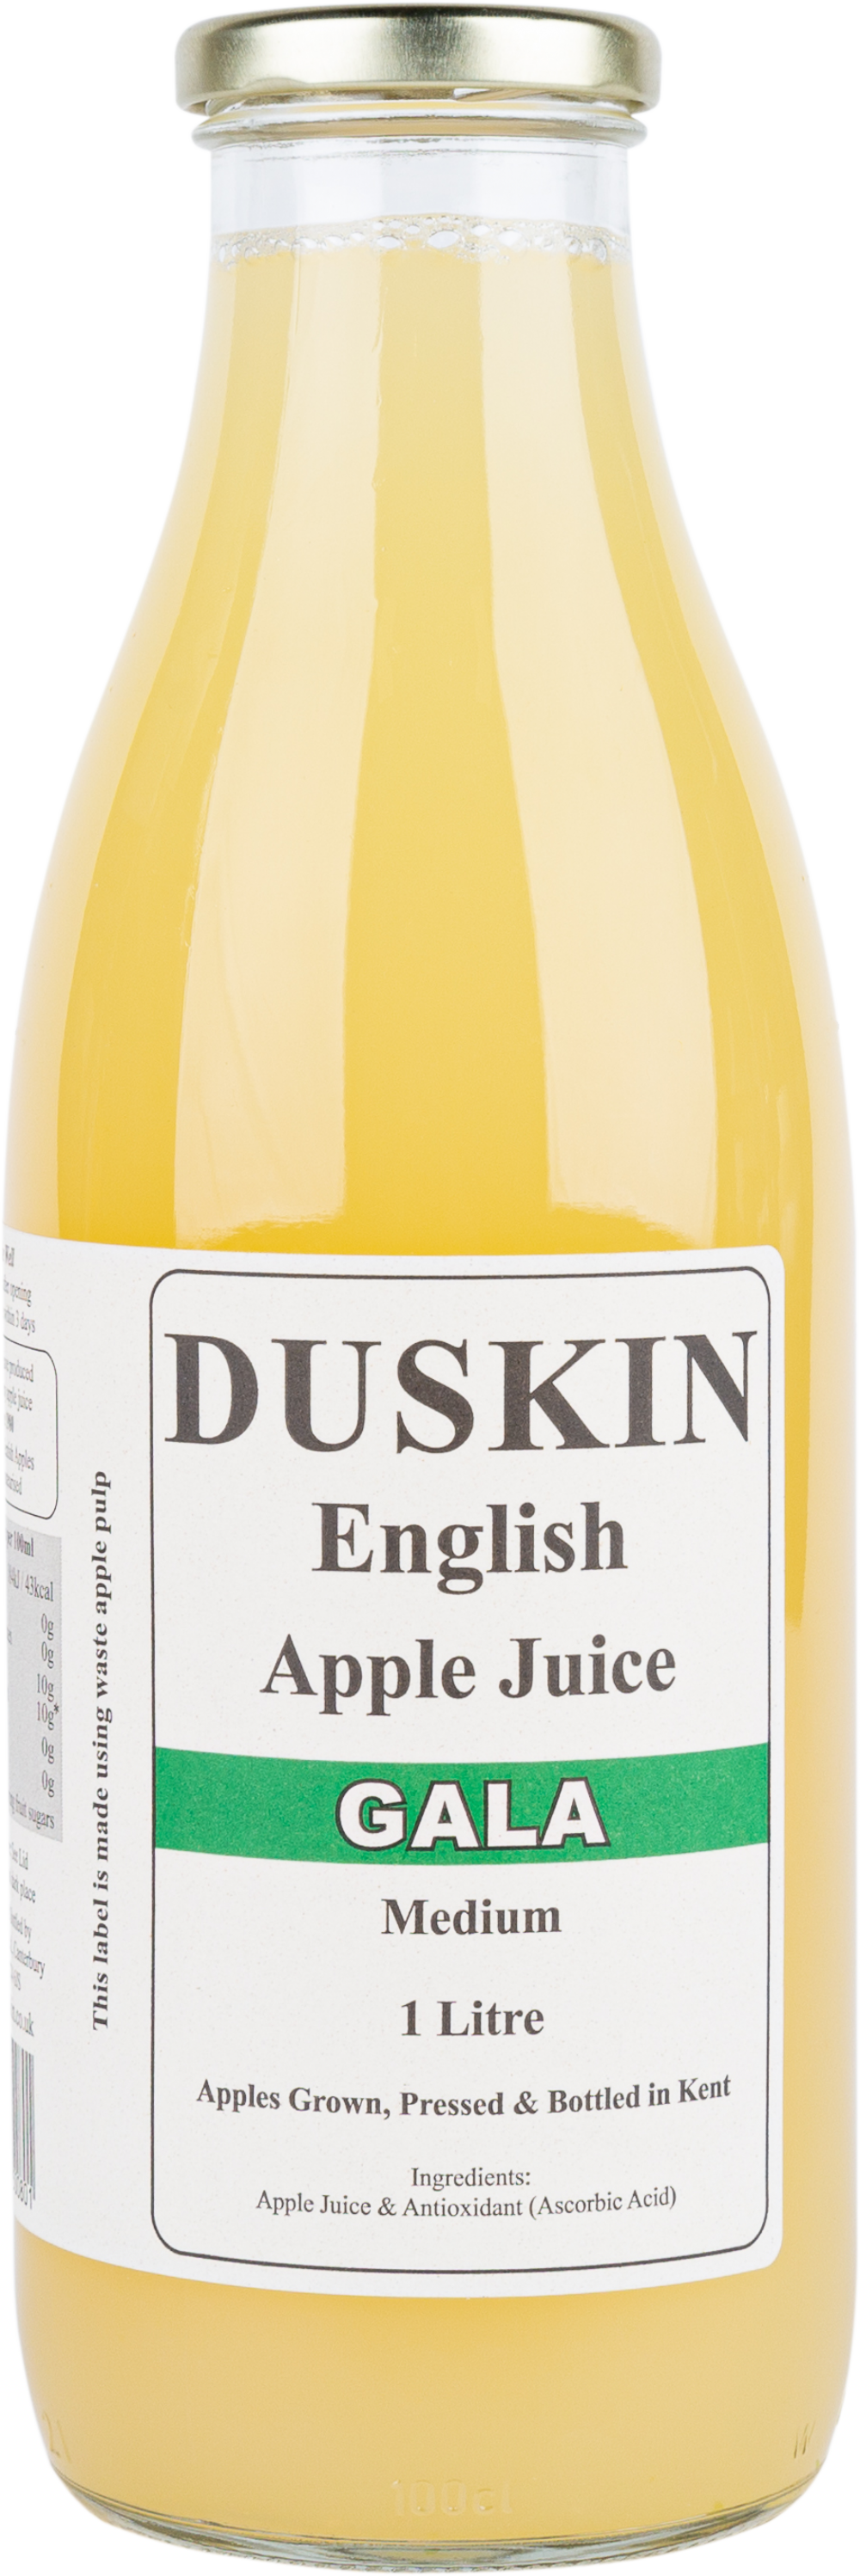 DUSKIN Pure English Apple Juice - Gala 1L